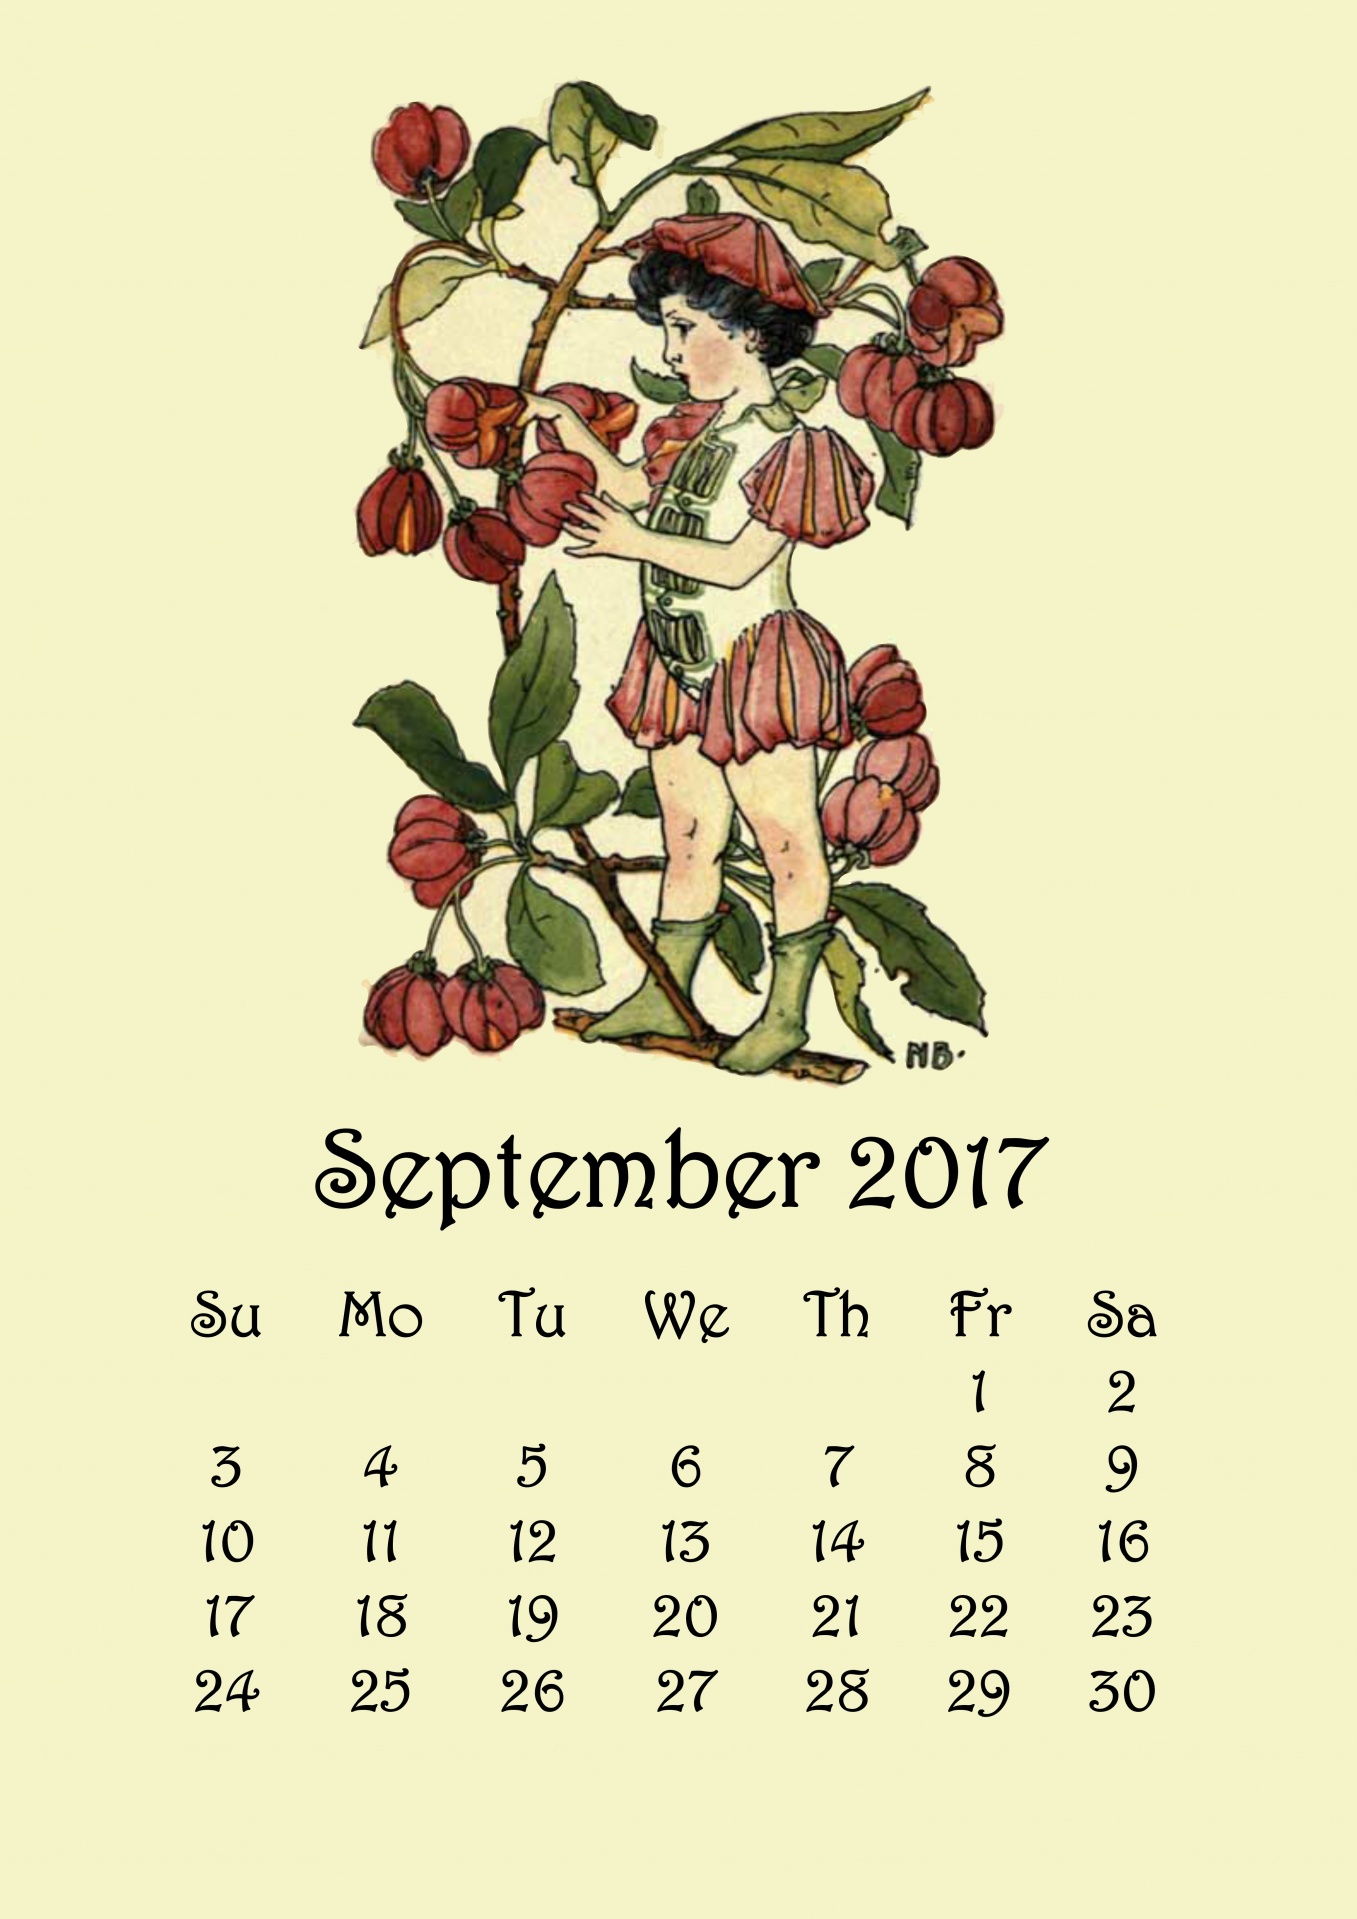 july 2017 calendar free photo